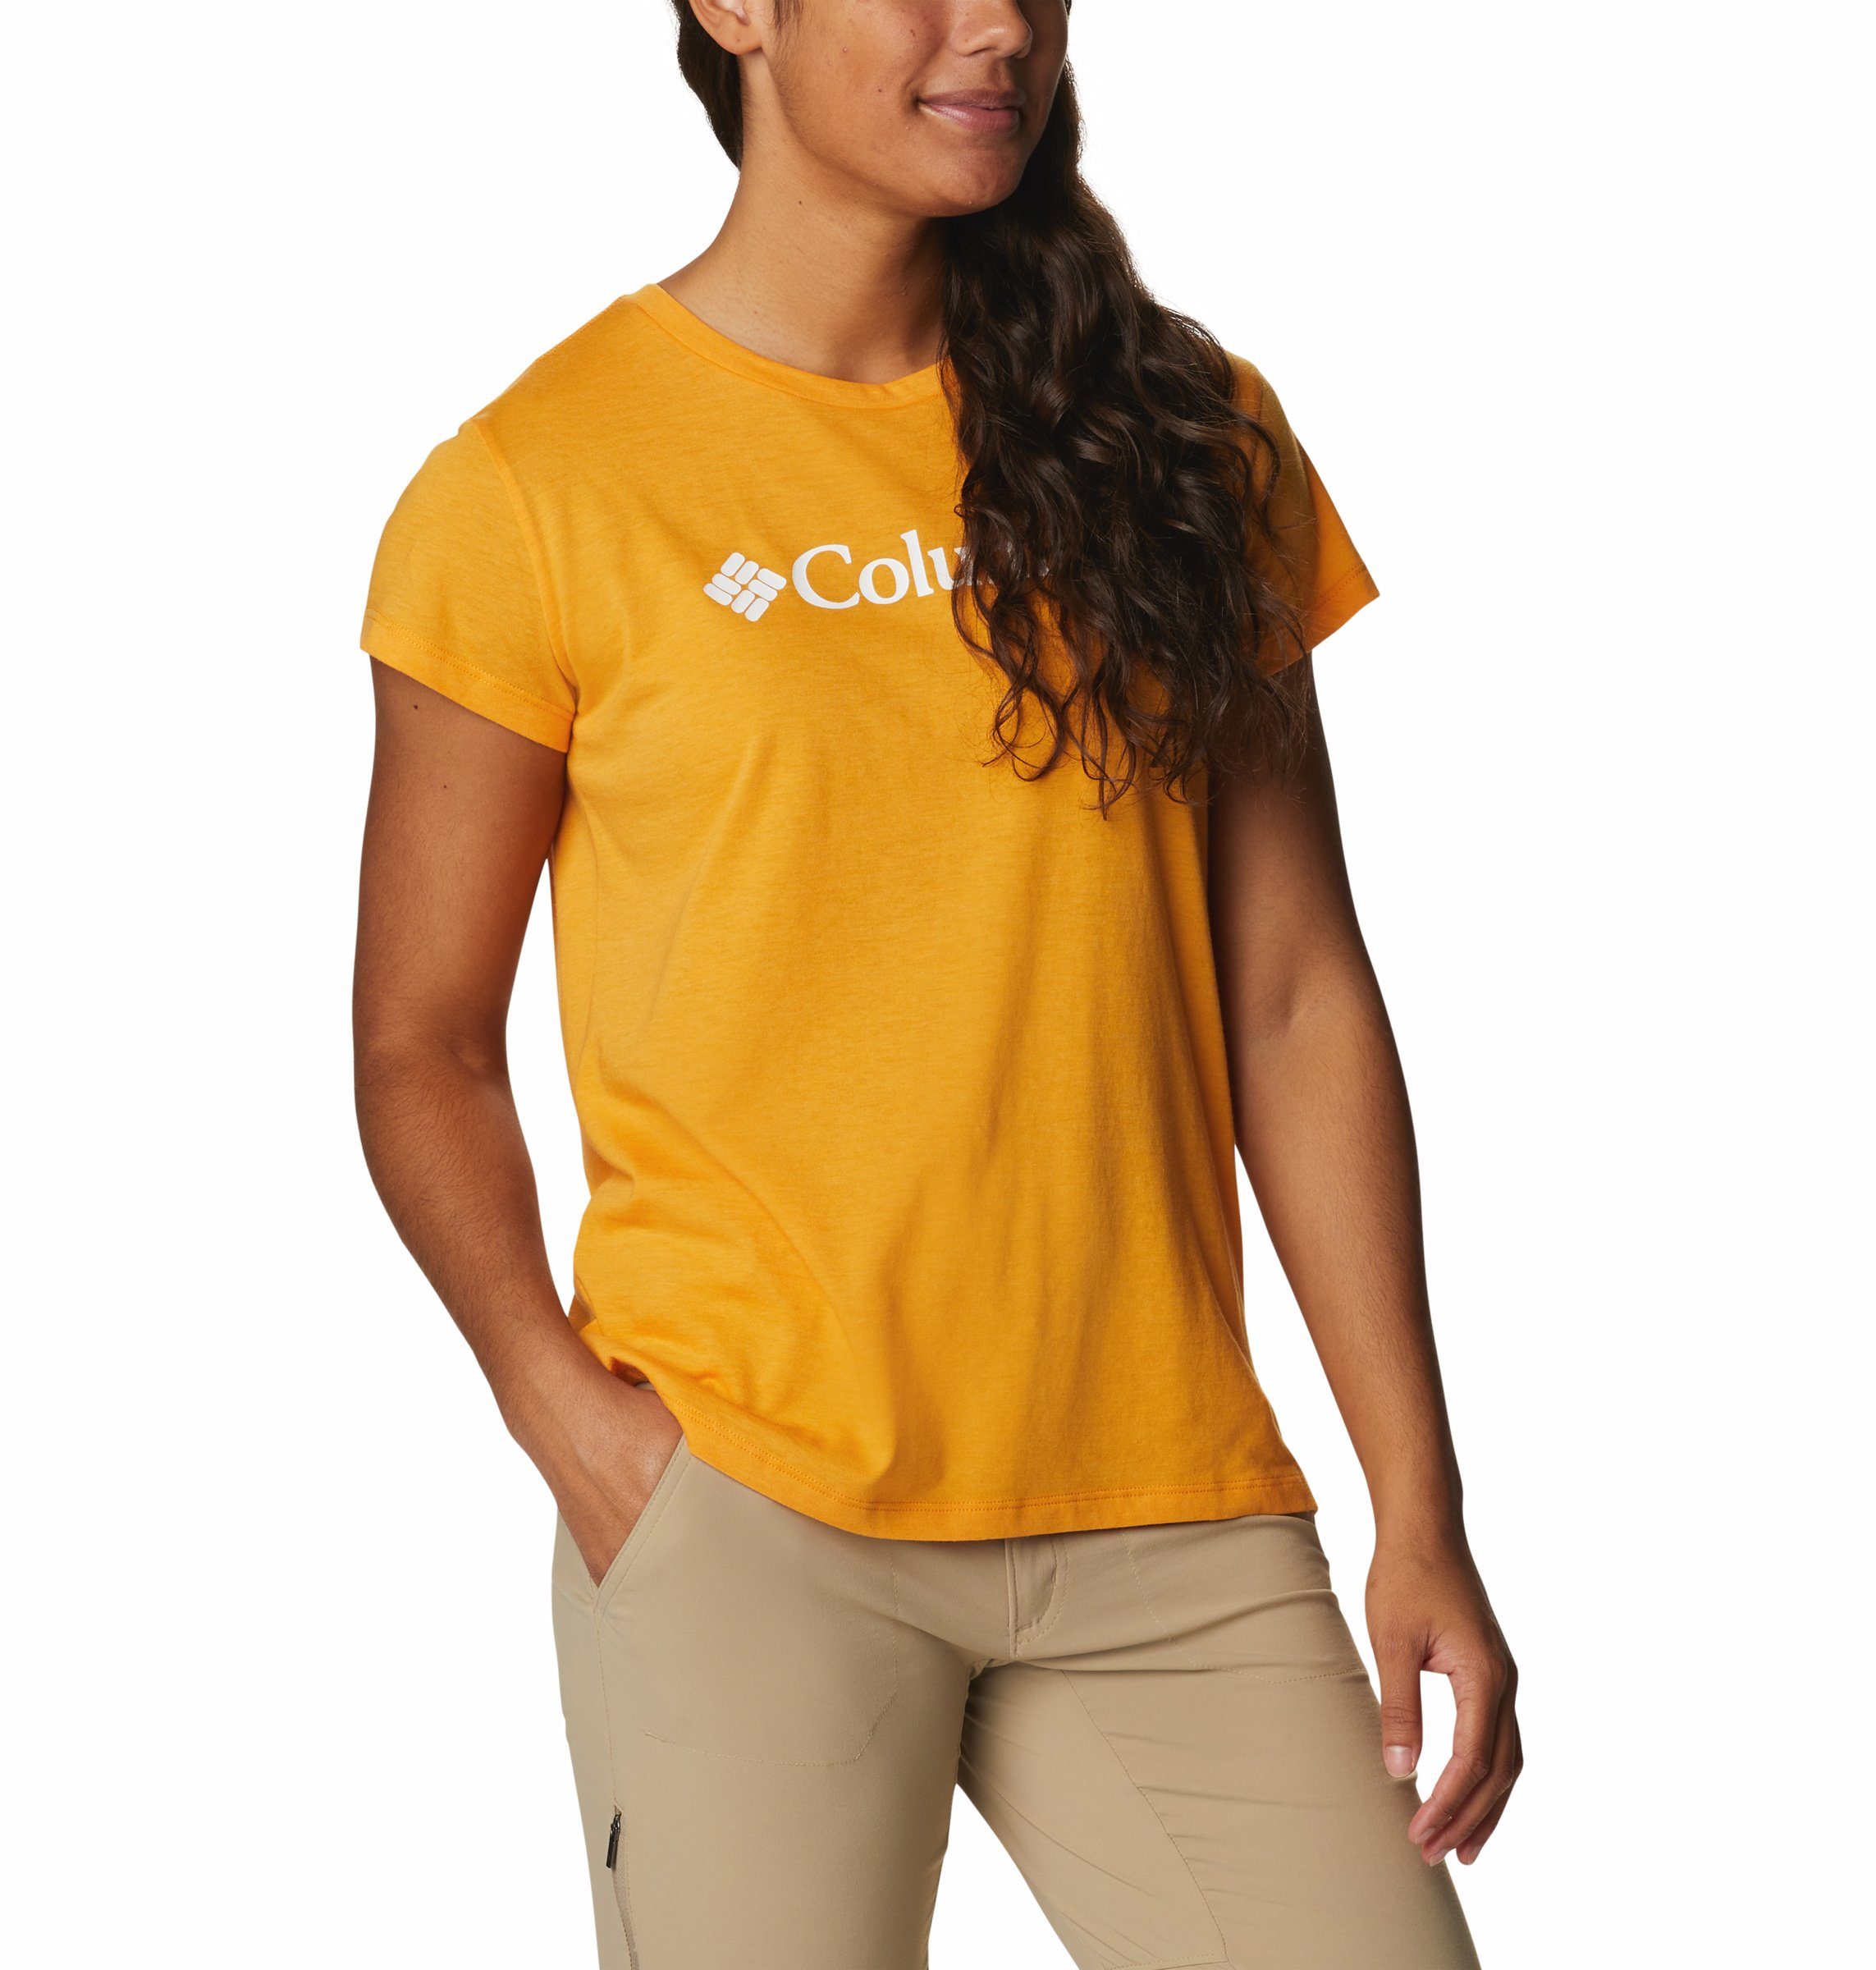 Damen Trek Graphic T-Shirt Columbia T-Shirt heather Columbia Adult Casual mango